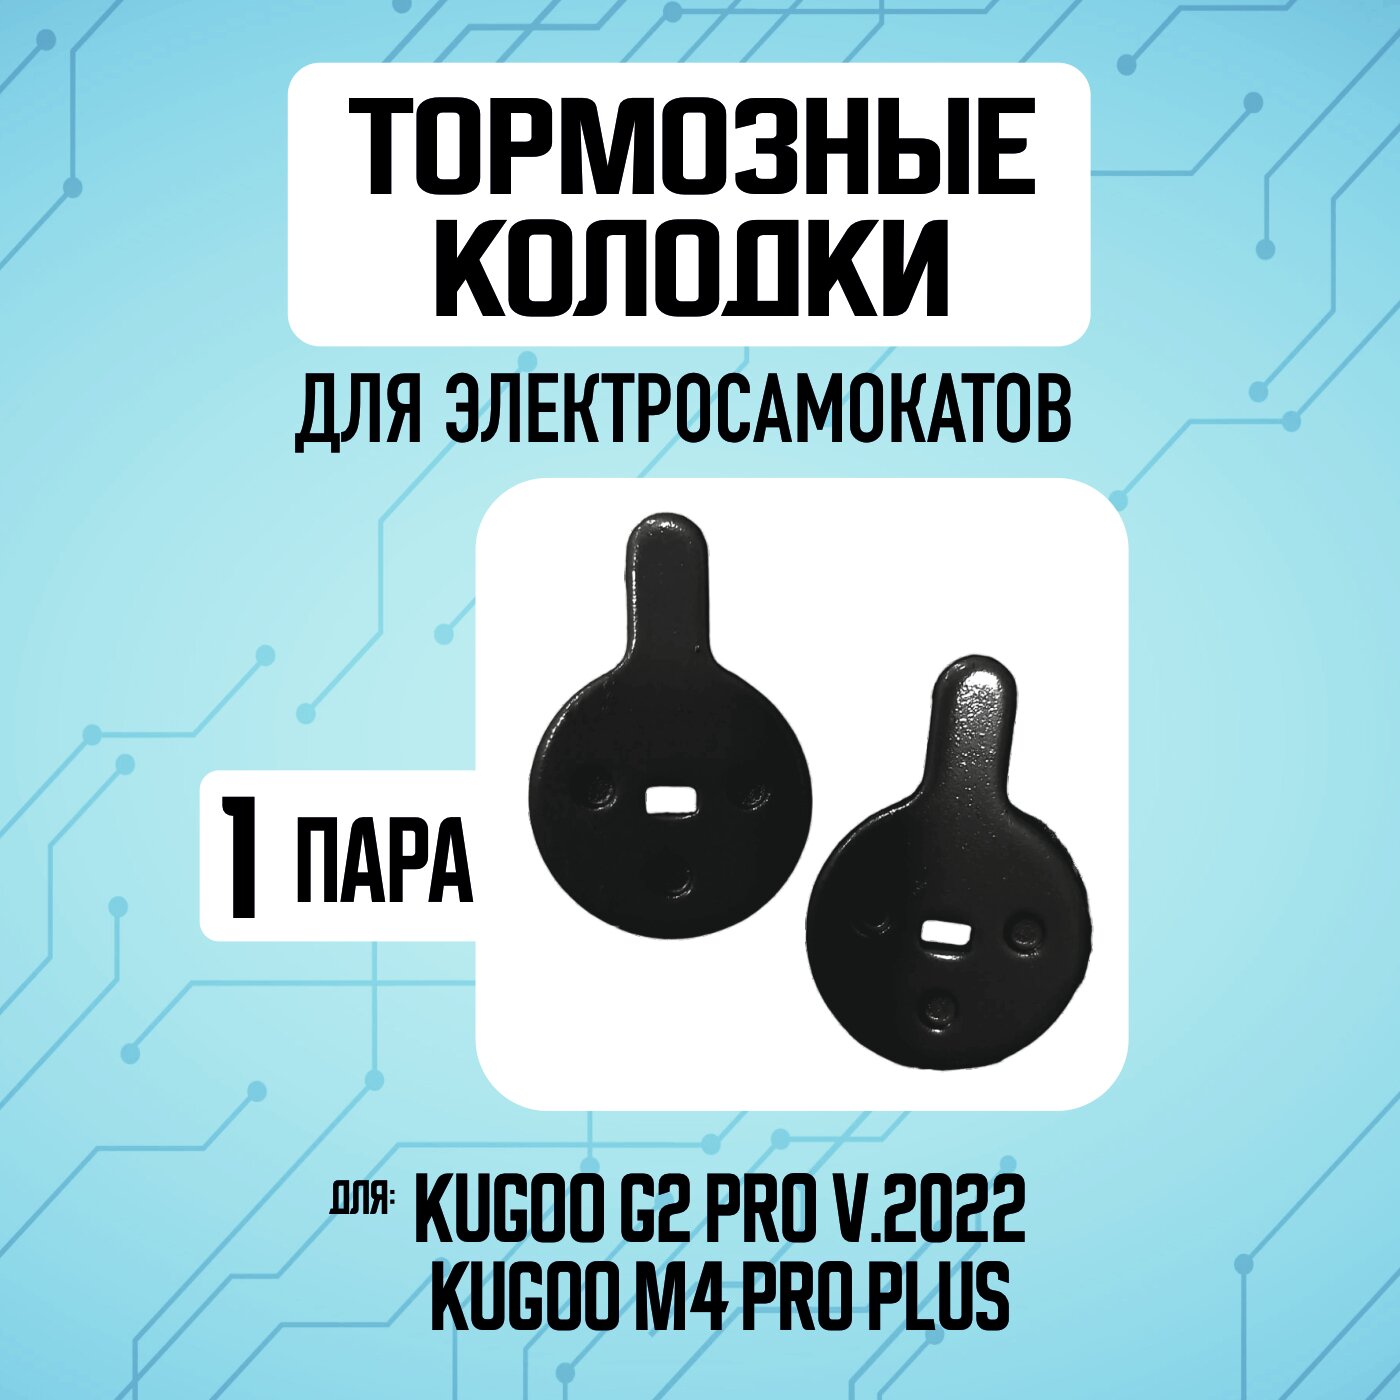 Тормозные колодки для электросамоката Kugoo G2 Pro, 1 пара